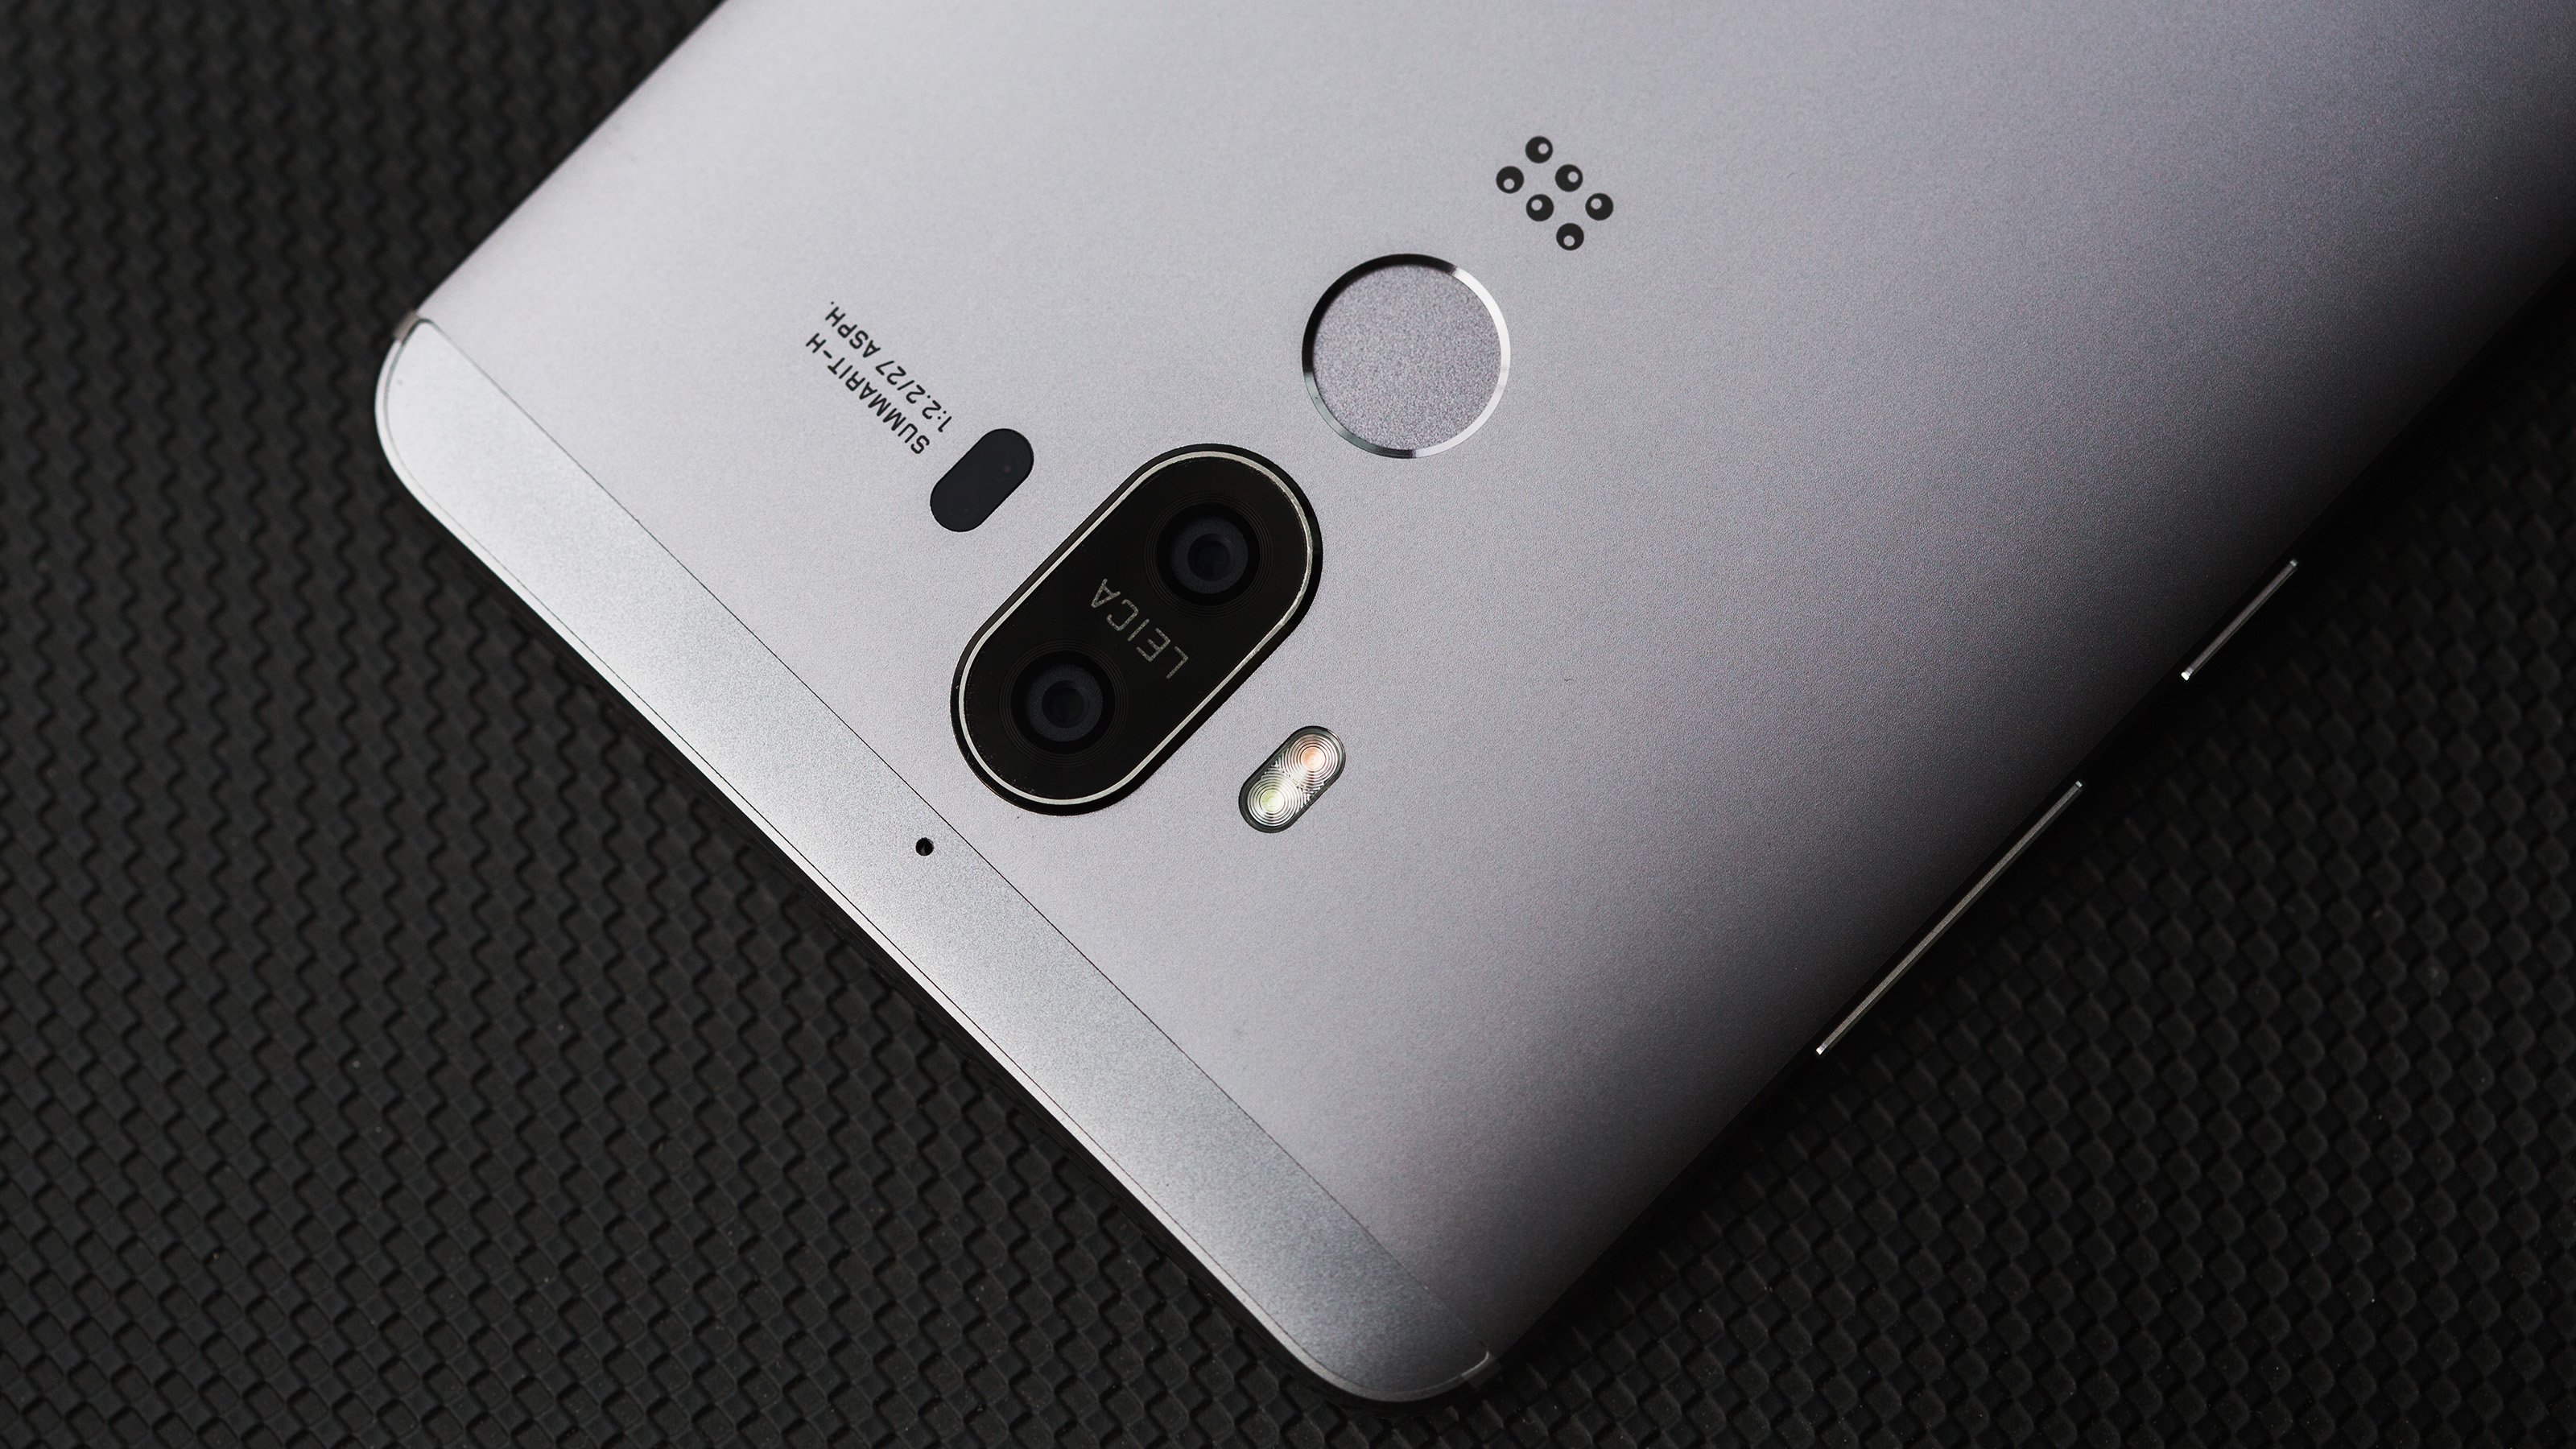 5 reasons to buy the Huawei Mate 9